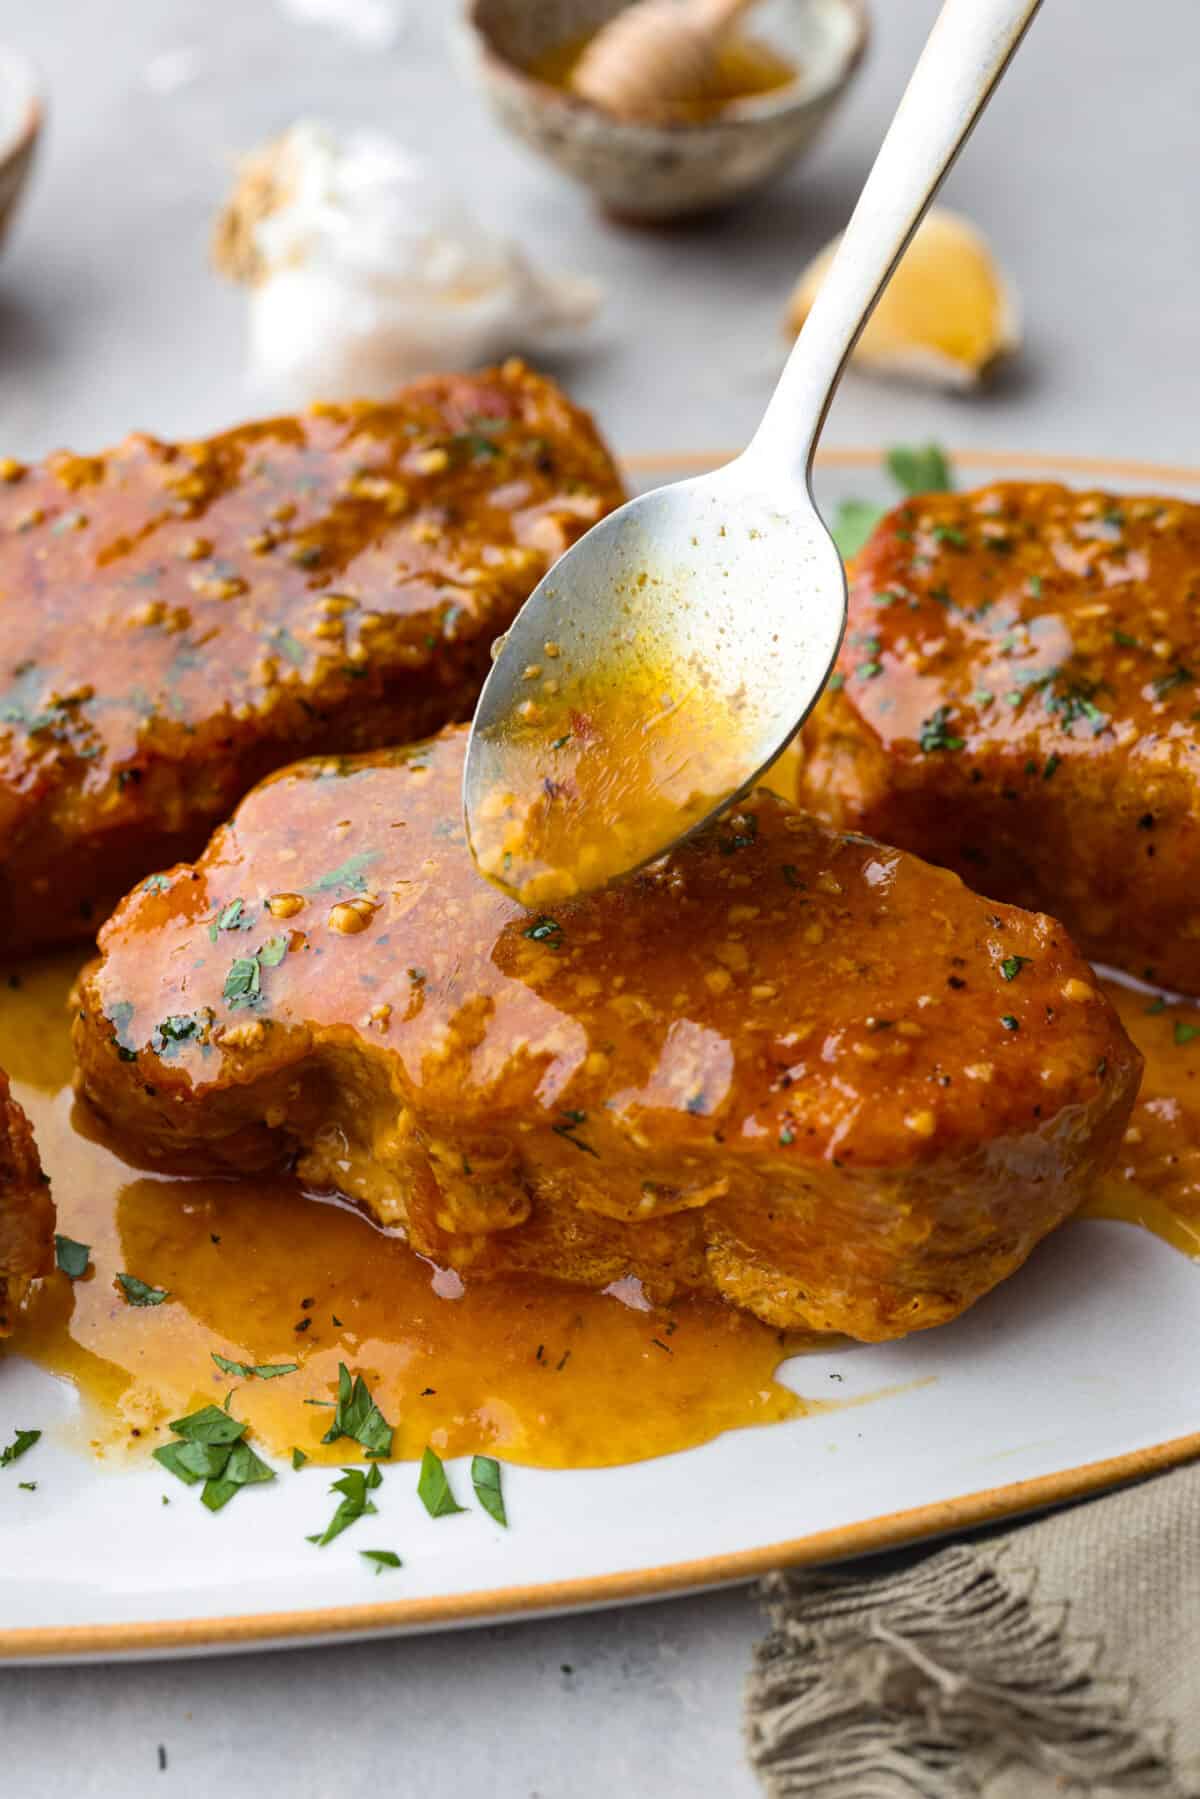 Spooning honey garlic sauce over a pork chop.